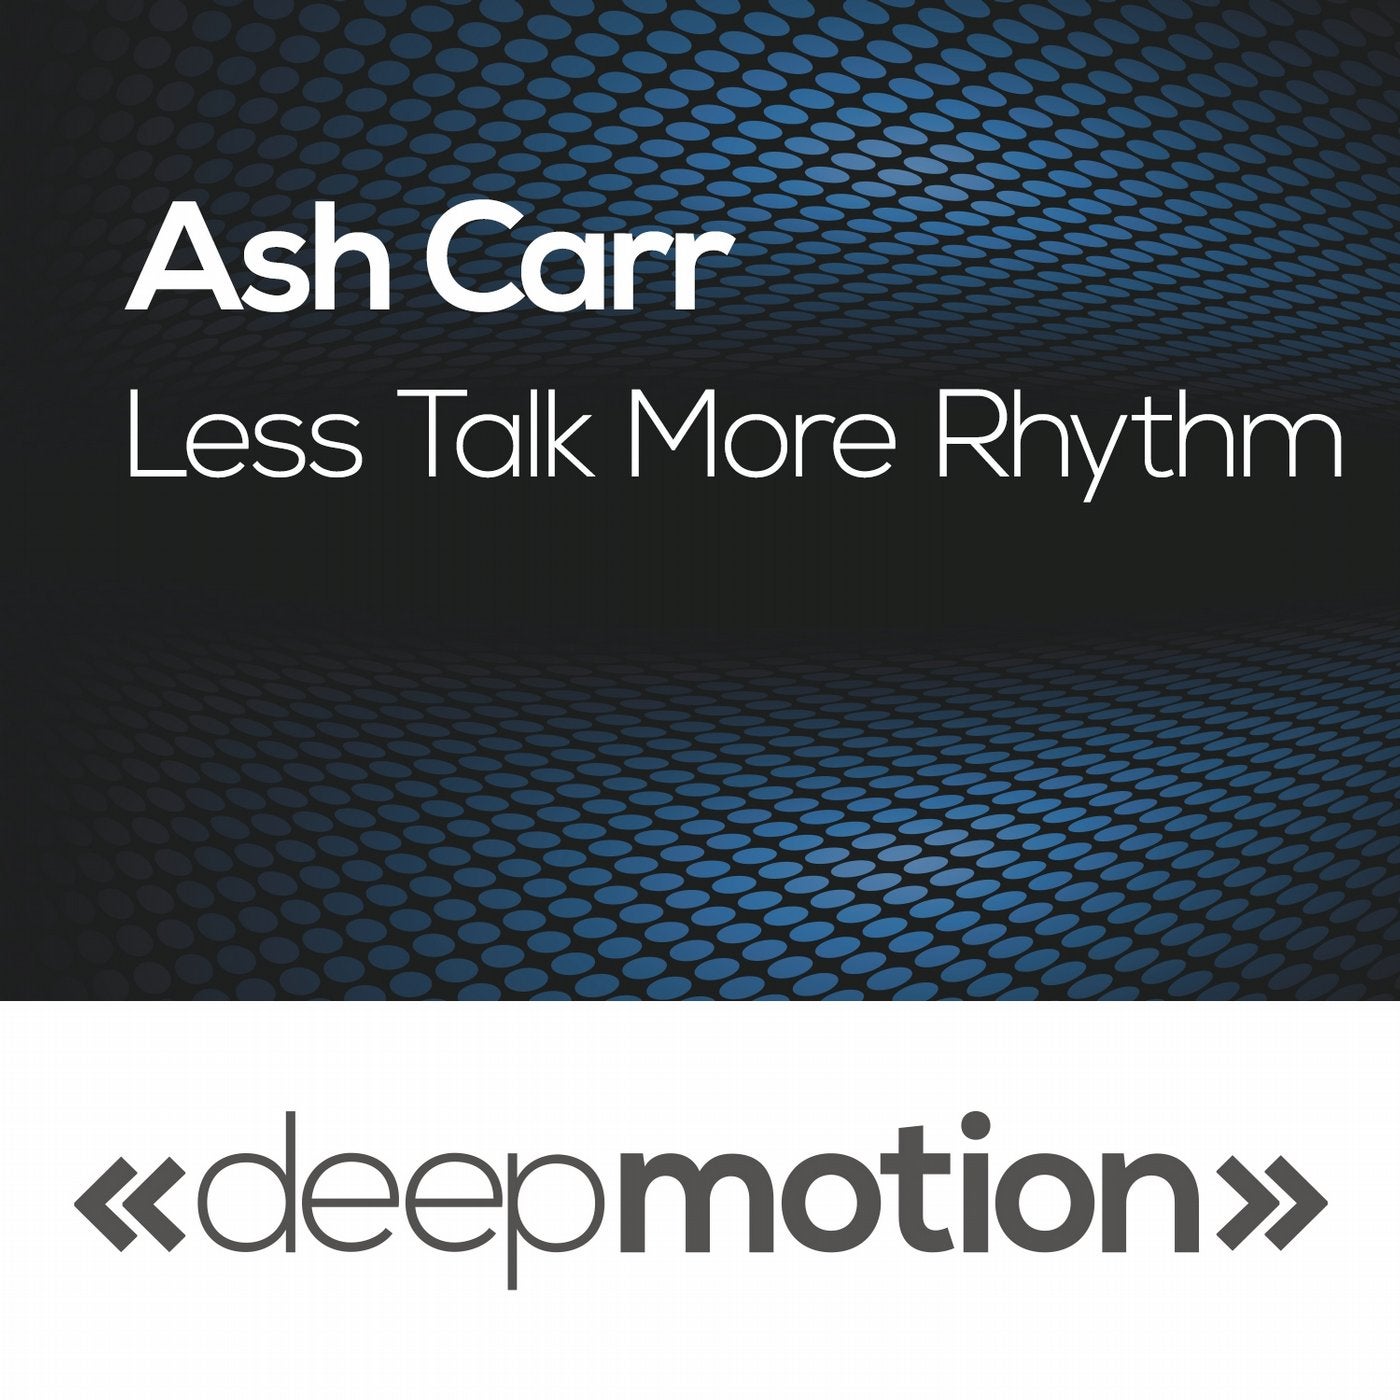 Less Talk More Rhythm